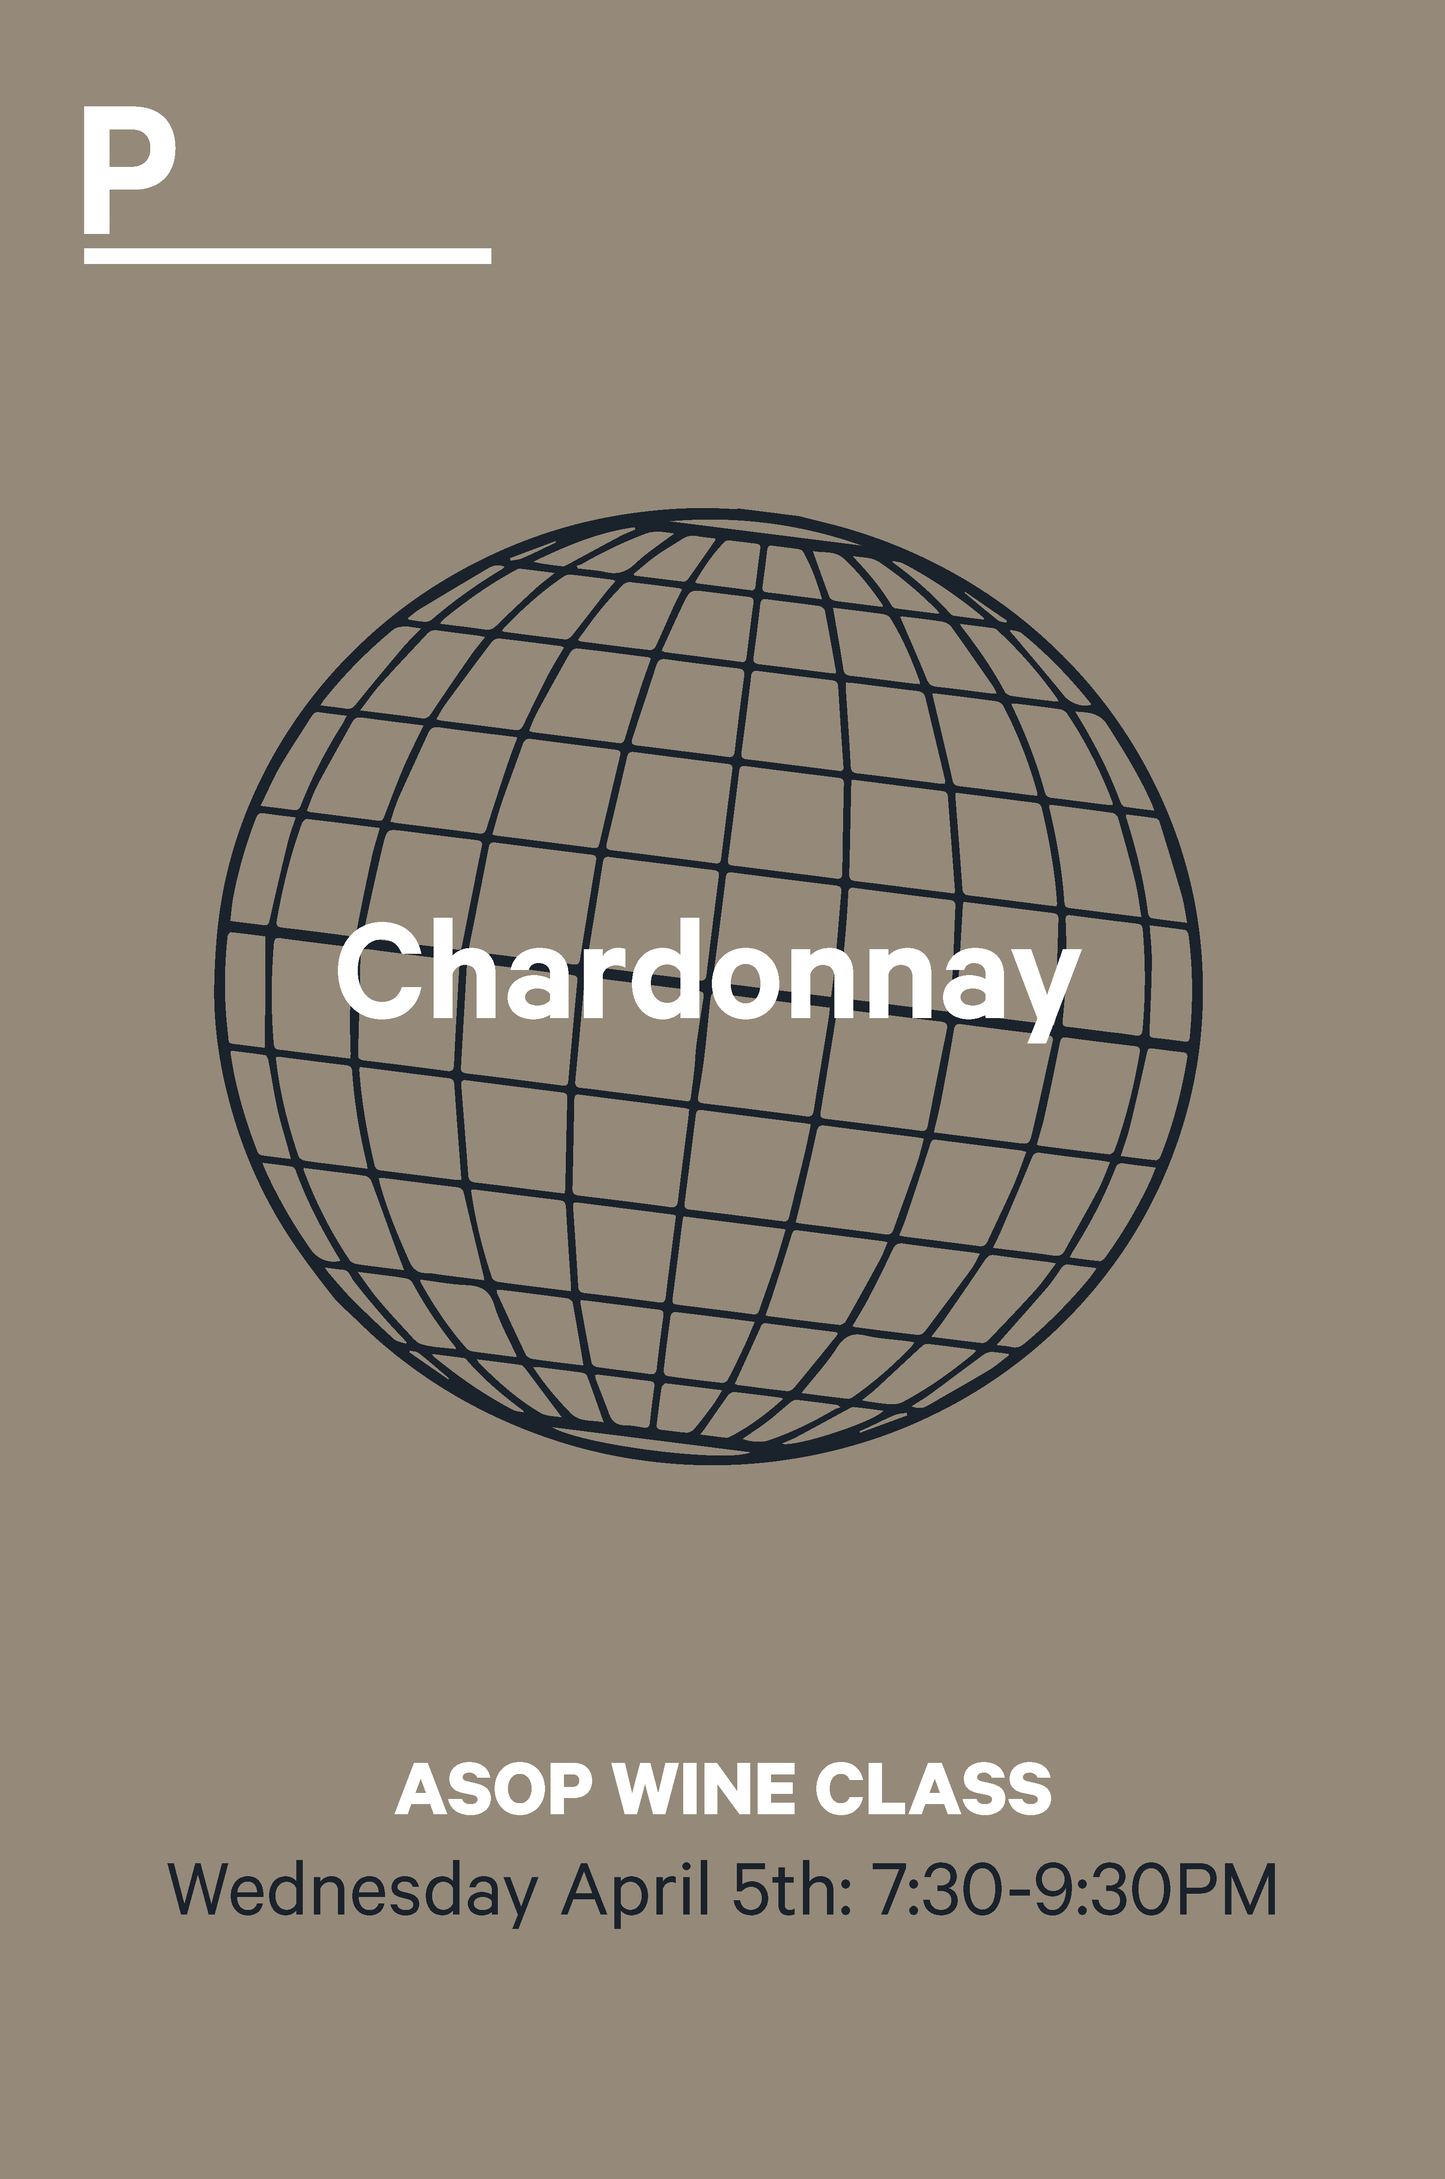 ASOP Wine Class: Chardonnay